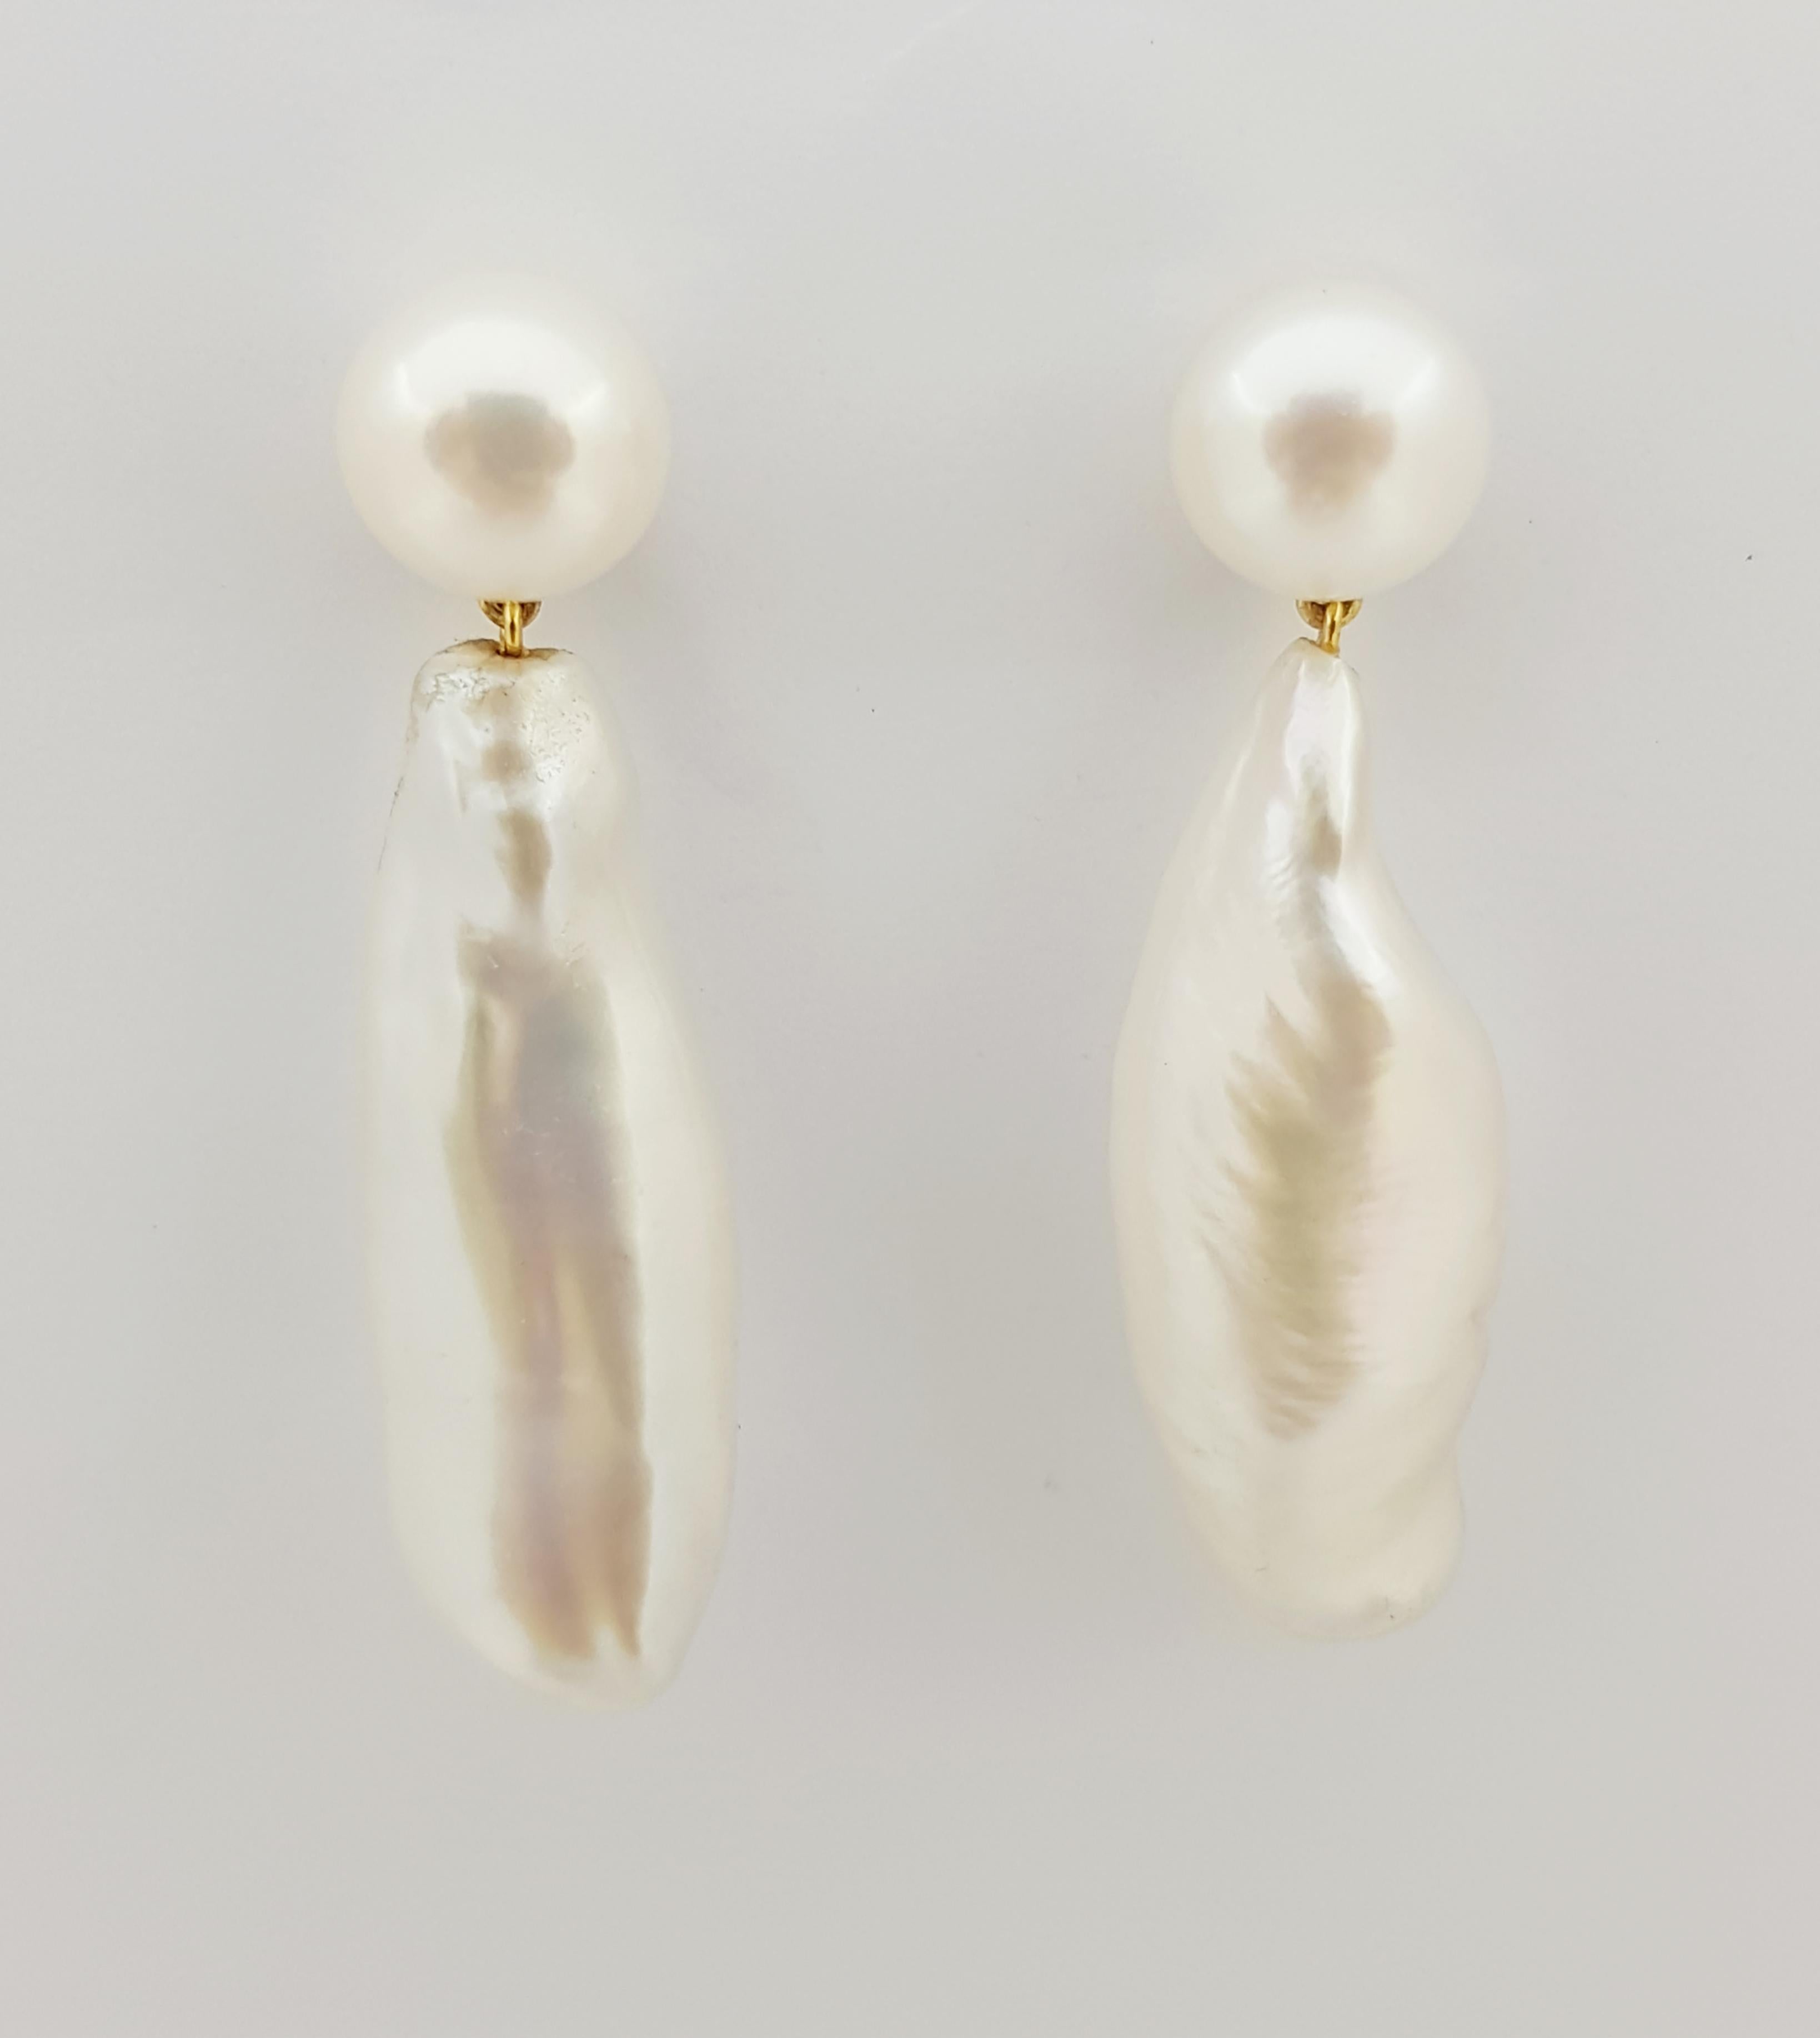 pearl earrings in gold setting